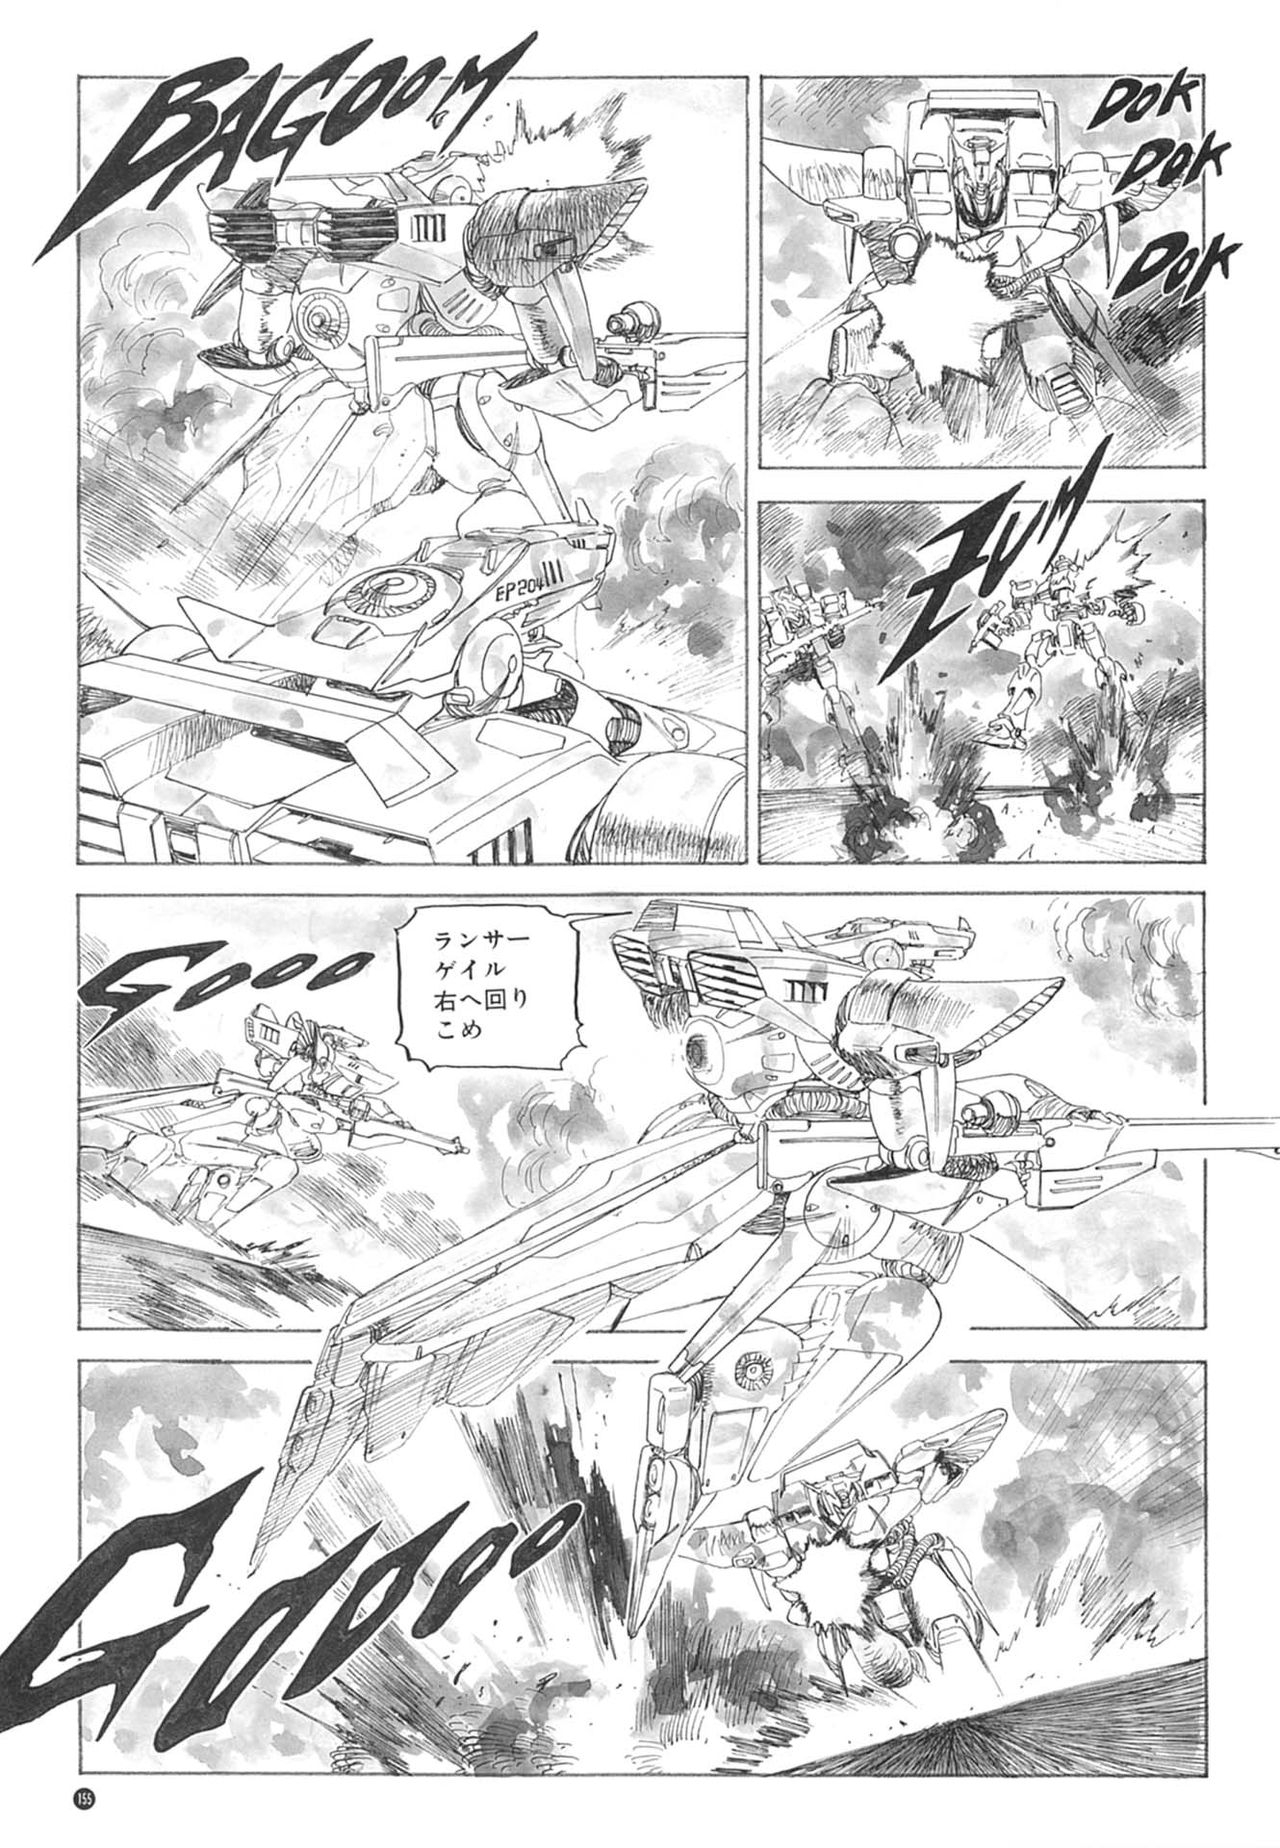 [Kazuhisa Kondo] Kazuhisa Kondo 2D & 3D Works - Go Ahead - From Mobile Suit Gundam to Original Mechanism 154